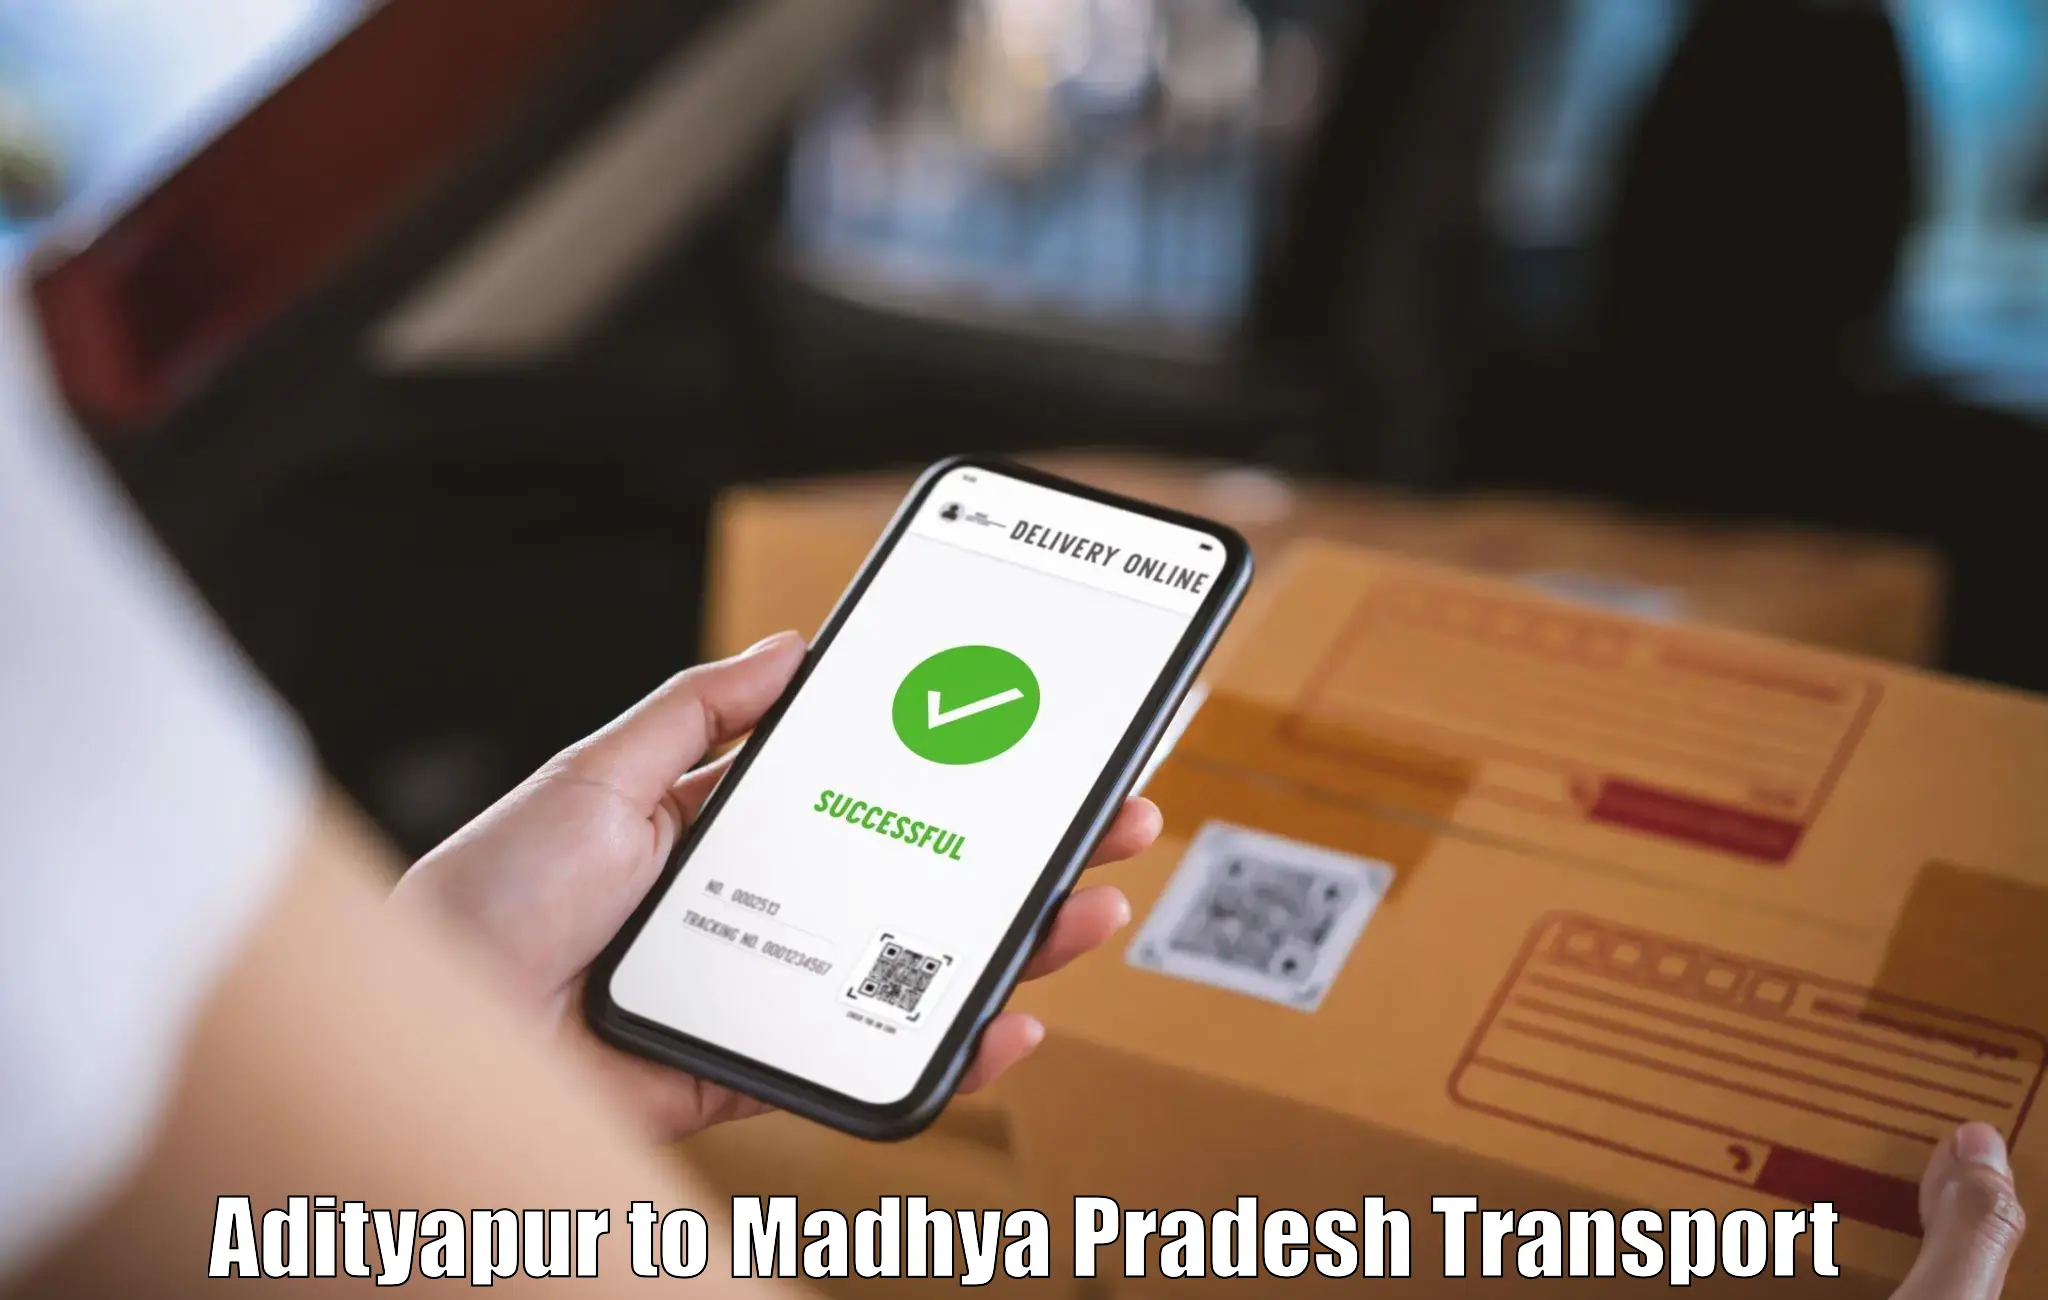 Daily transport service Adityapur to Sausar